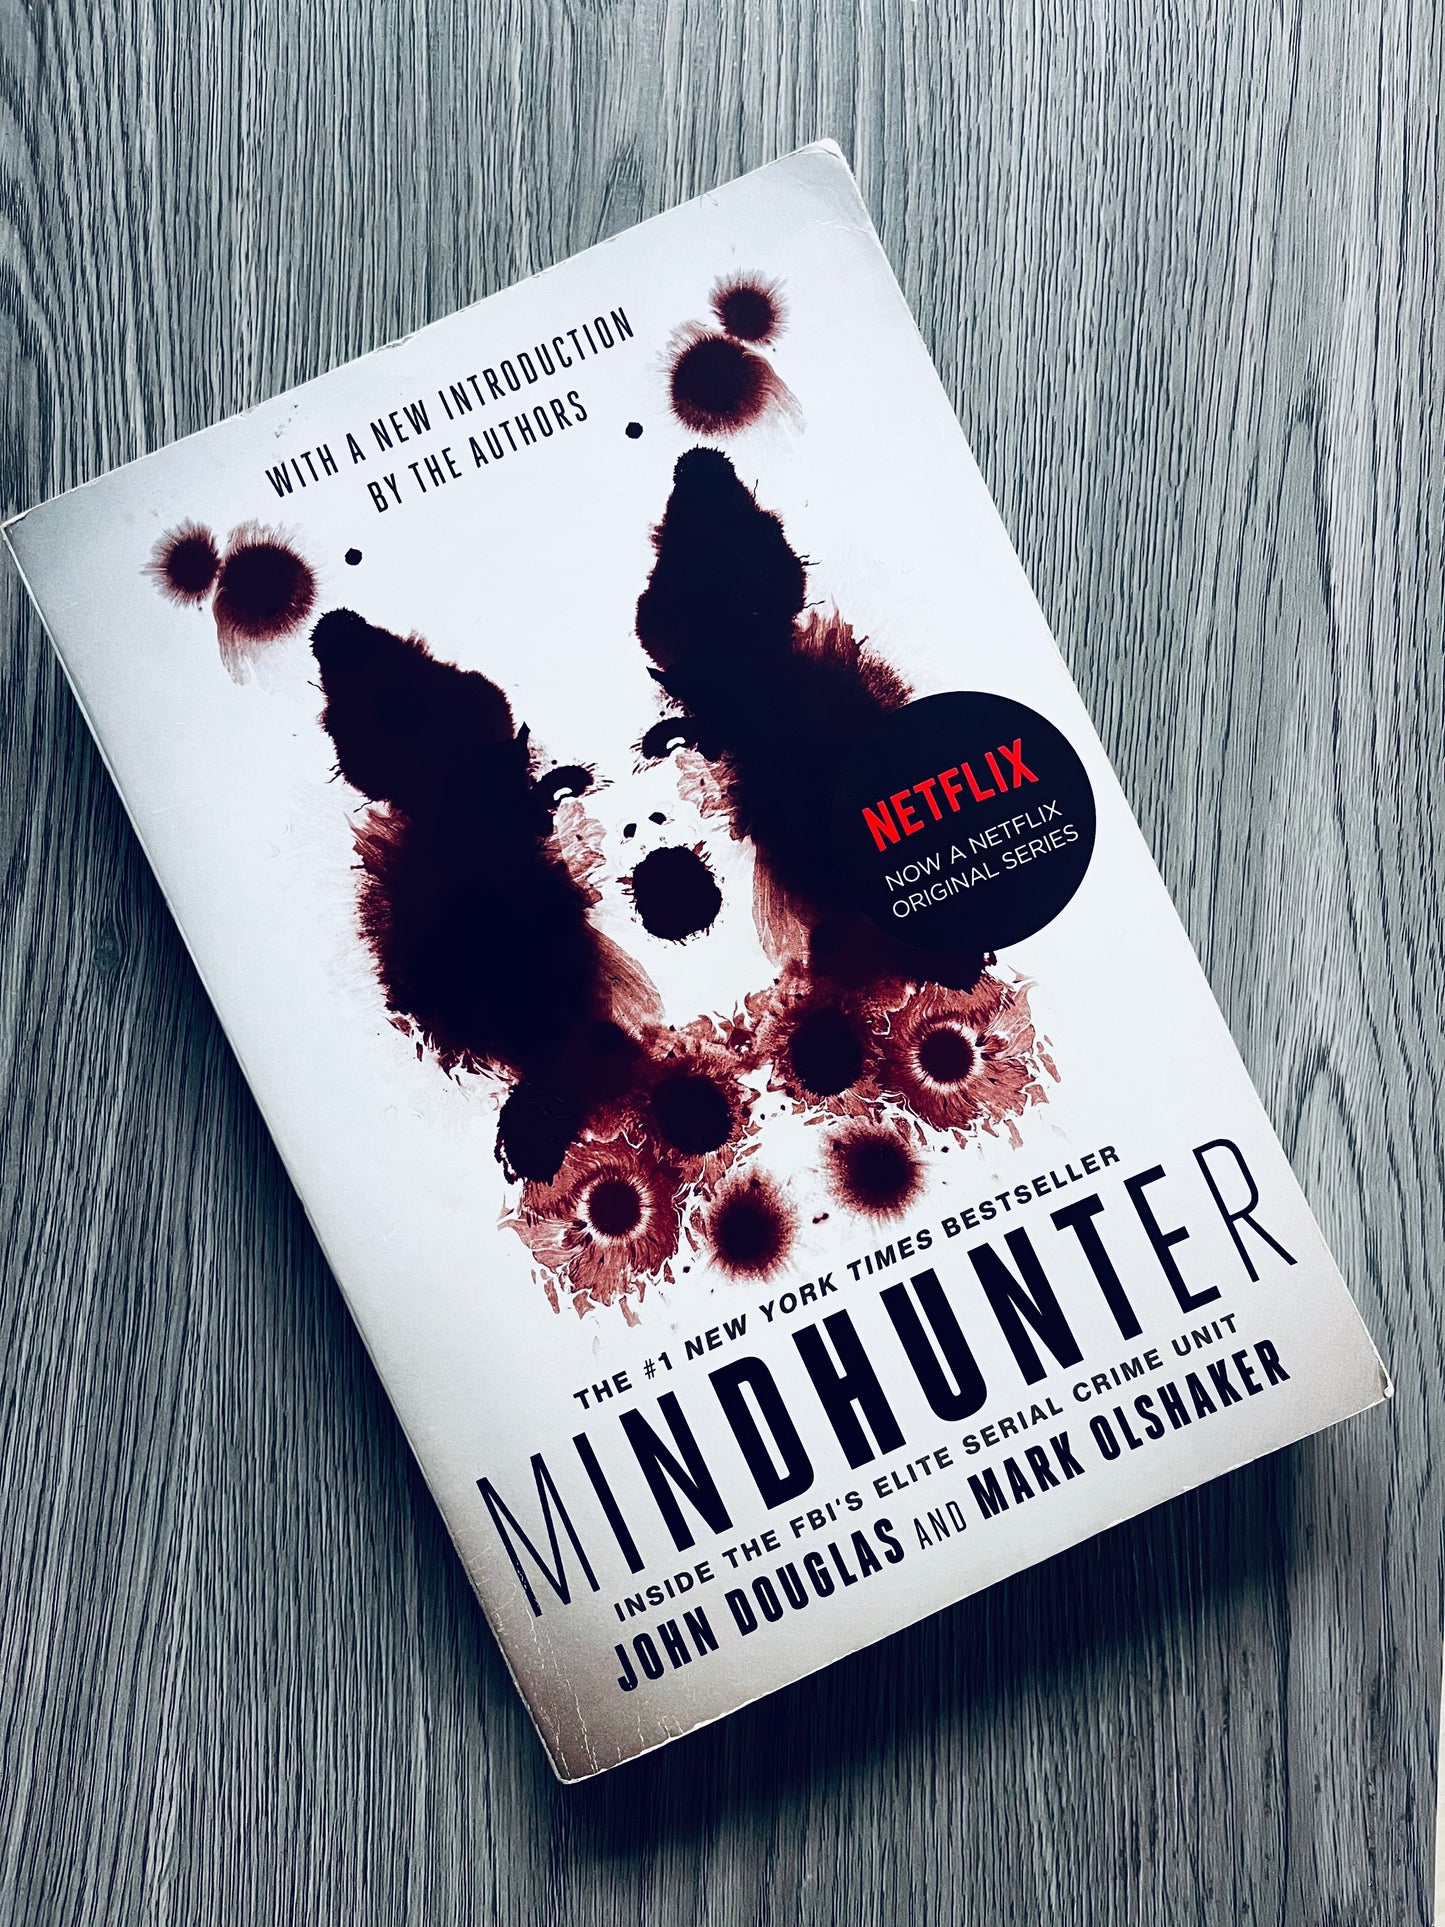 Mindhunter: Inside the FBI's Elite Serial Crime Unit by John Douglas